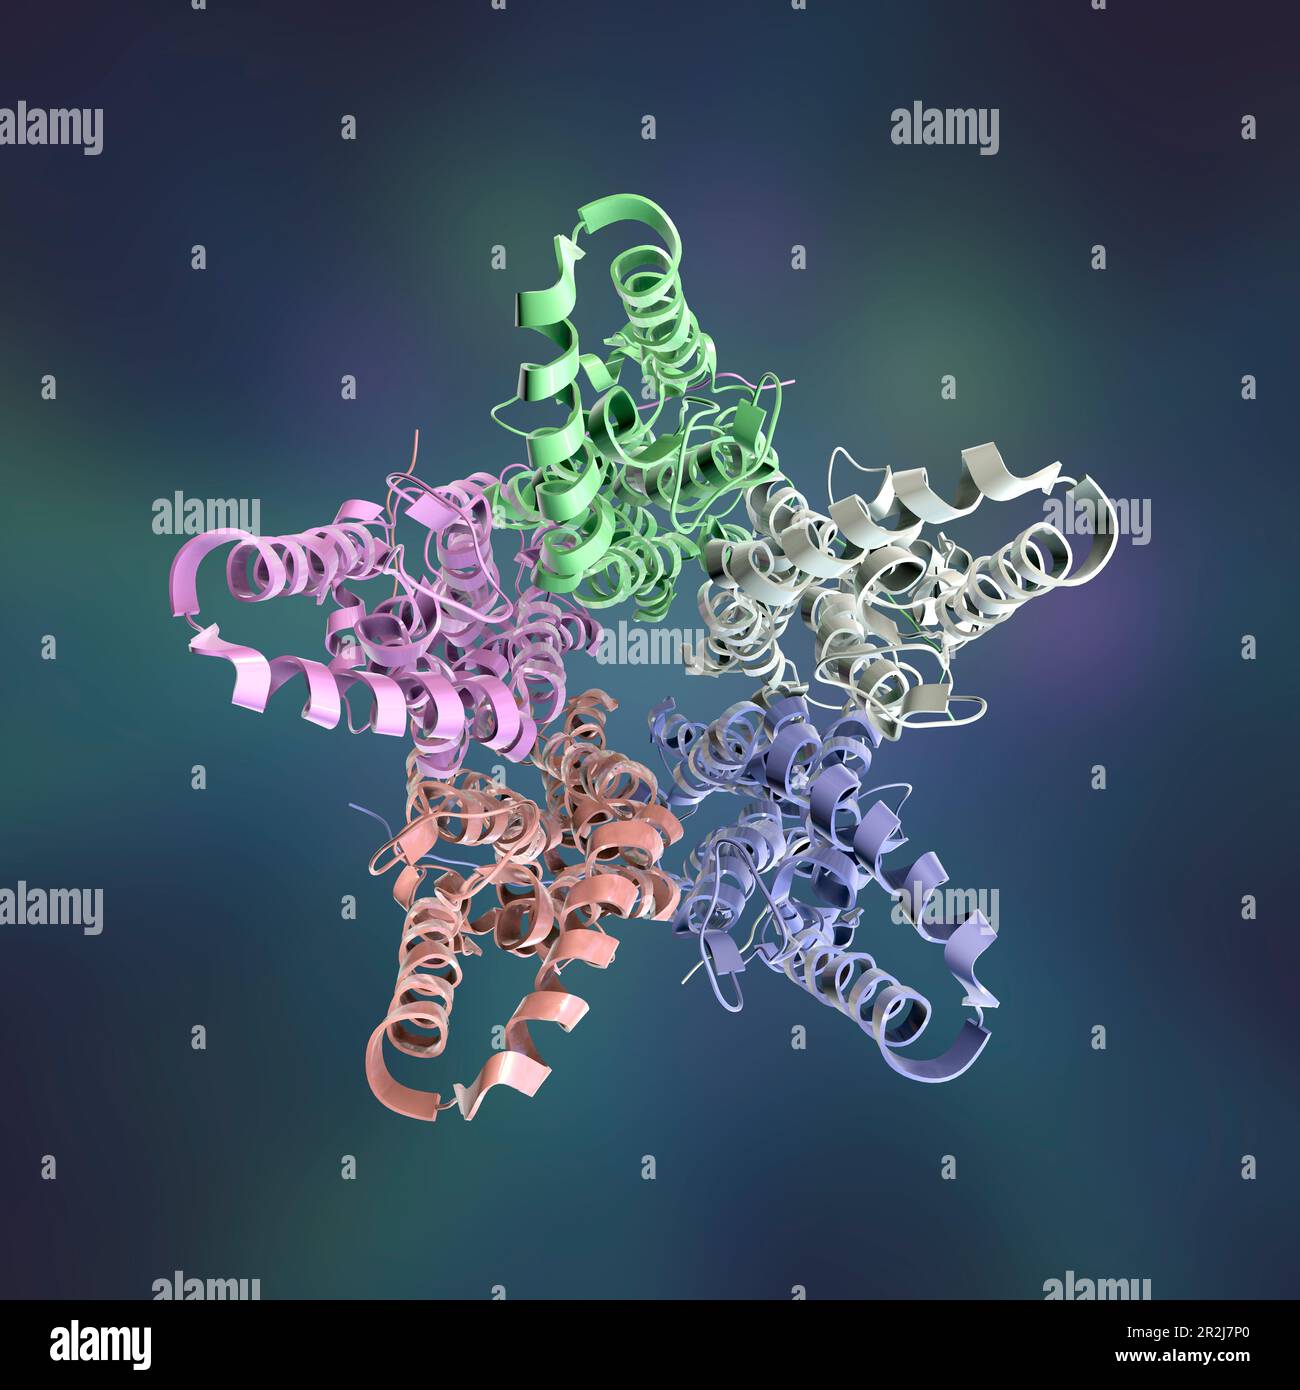 Bestrophin-1 protein molecule, illustration Stock Photo